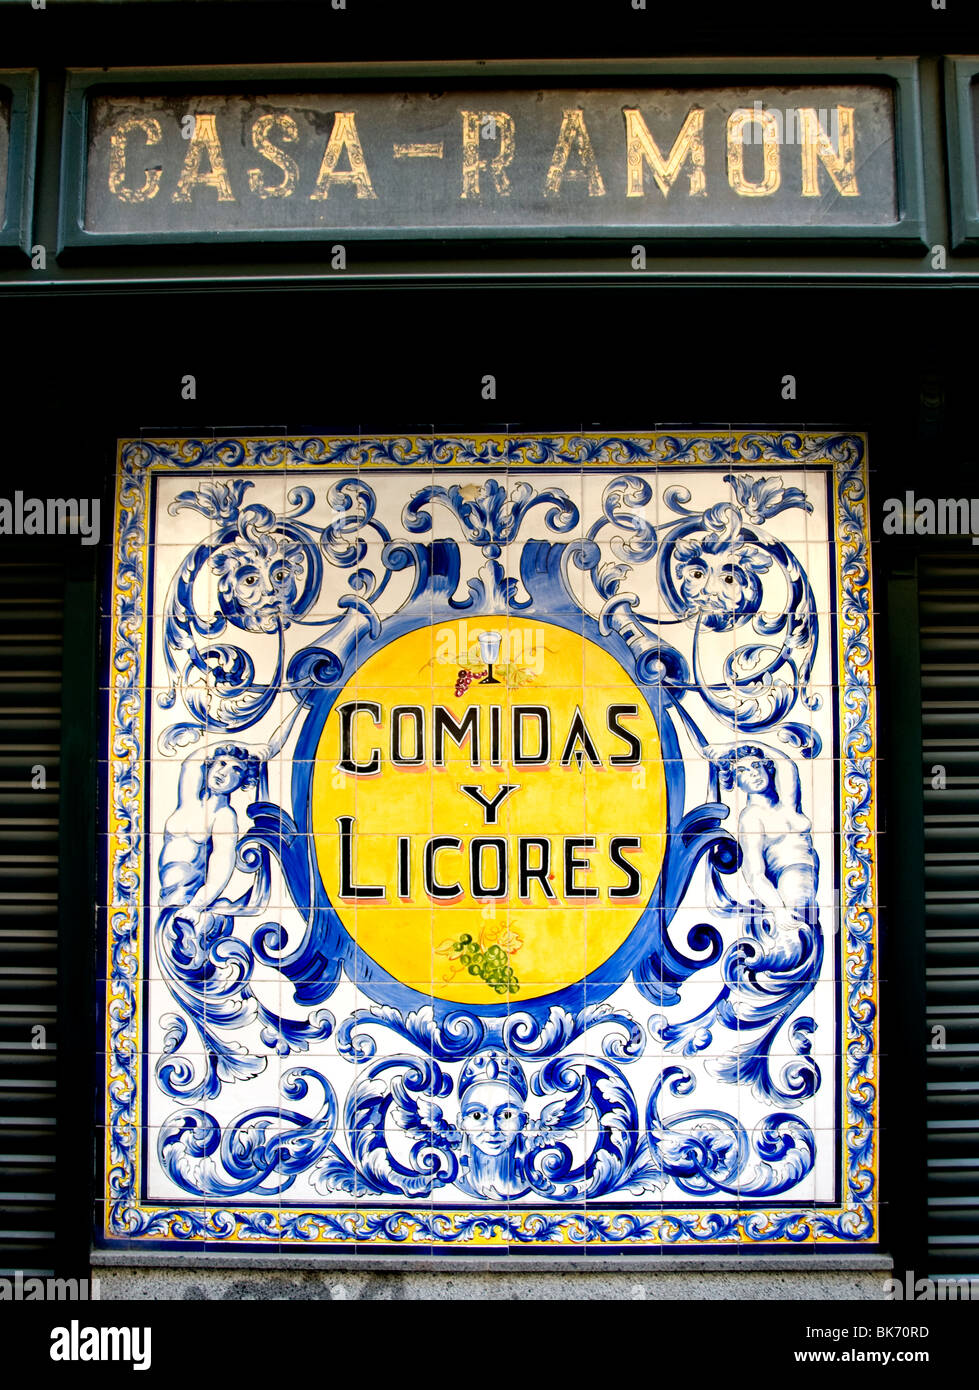 Comidas Casa Ramon Vecchia Madrid Spagna Bar Pub ristorante Cafe Foto Stock